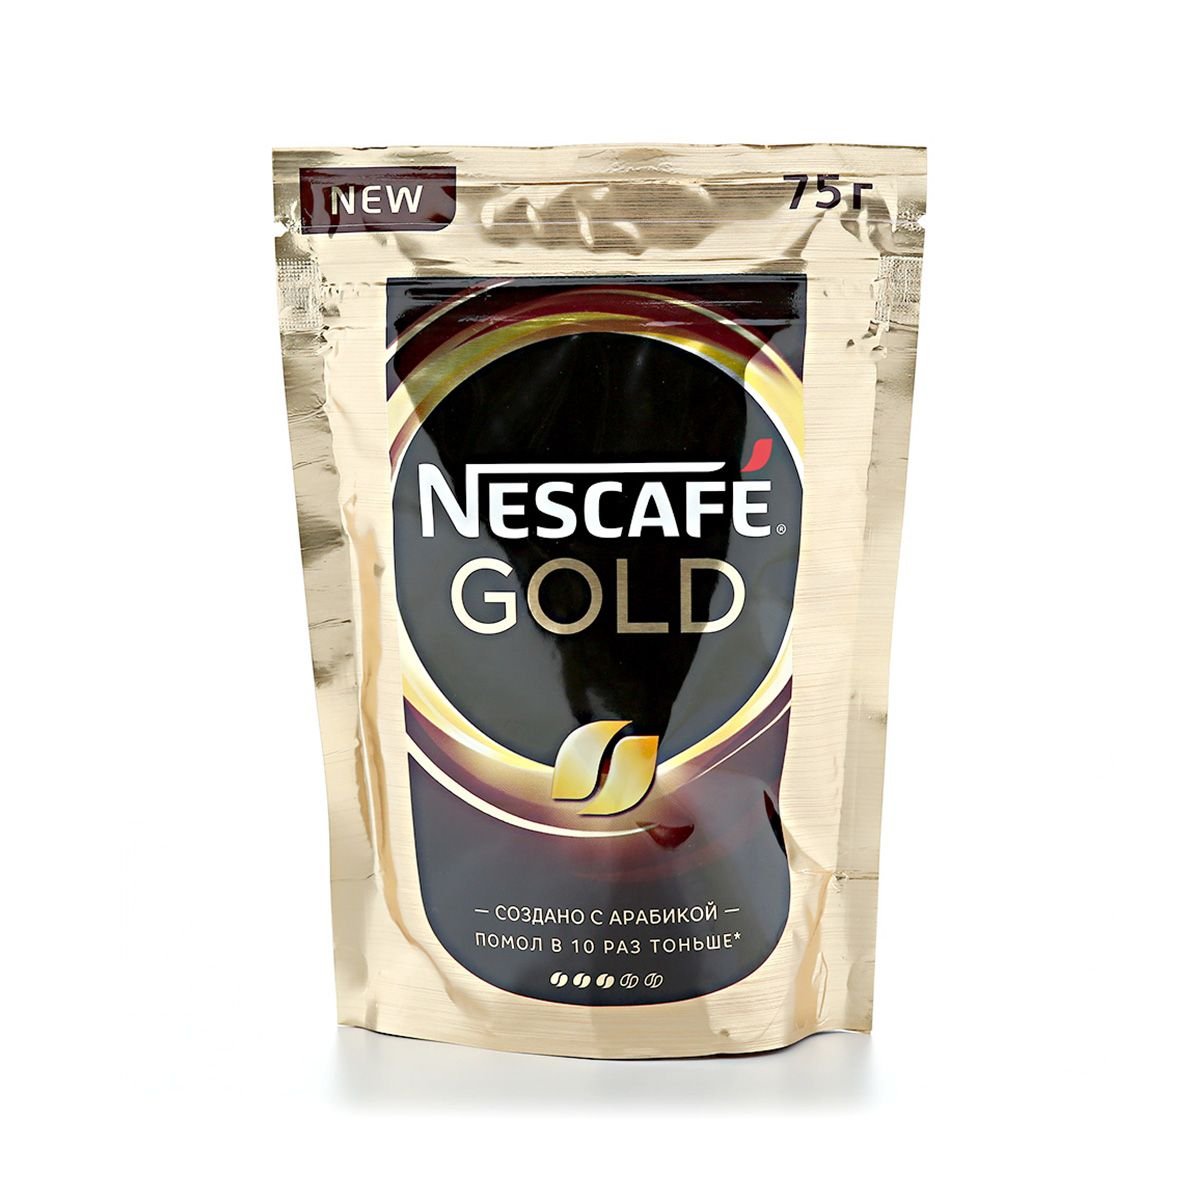 Nescafe gold пакет. Кофе "Нескафе" Голд пакет 75г. Nescafe Gold 75 гр. Кофе Нескафе Голд 75г м/у. Кофе растворимый Nescafe Gold пакет, 75г.